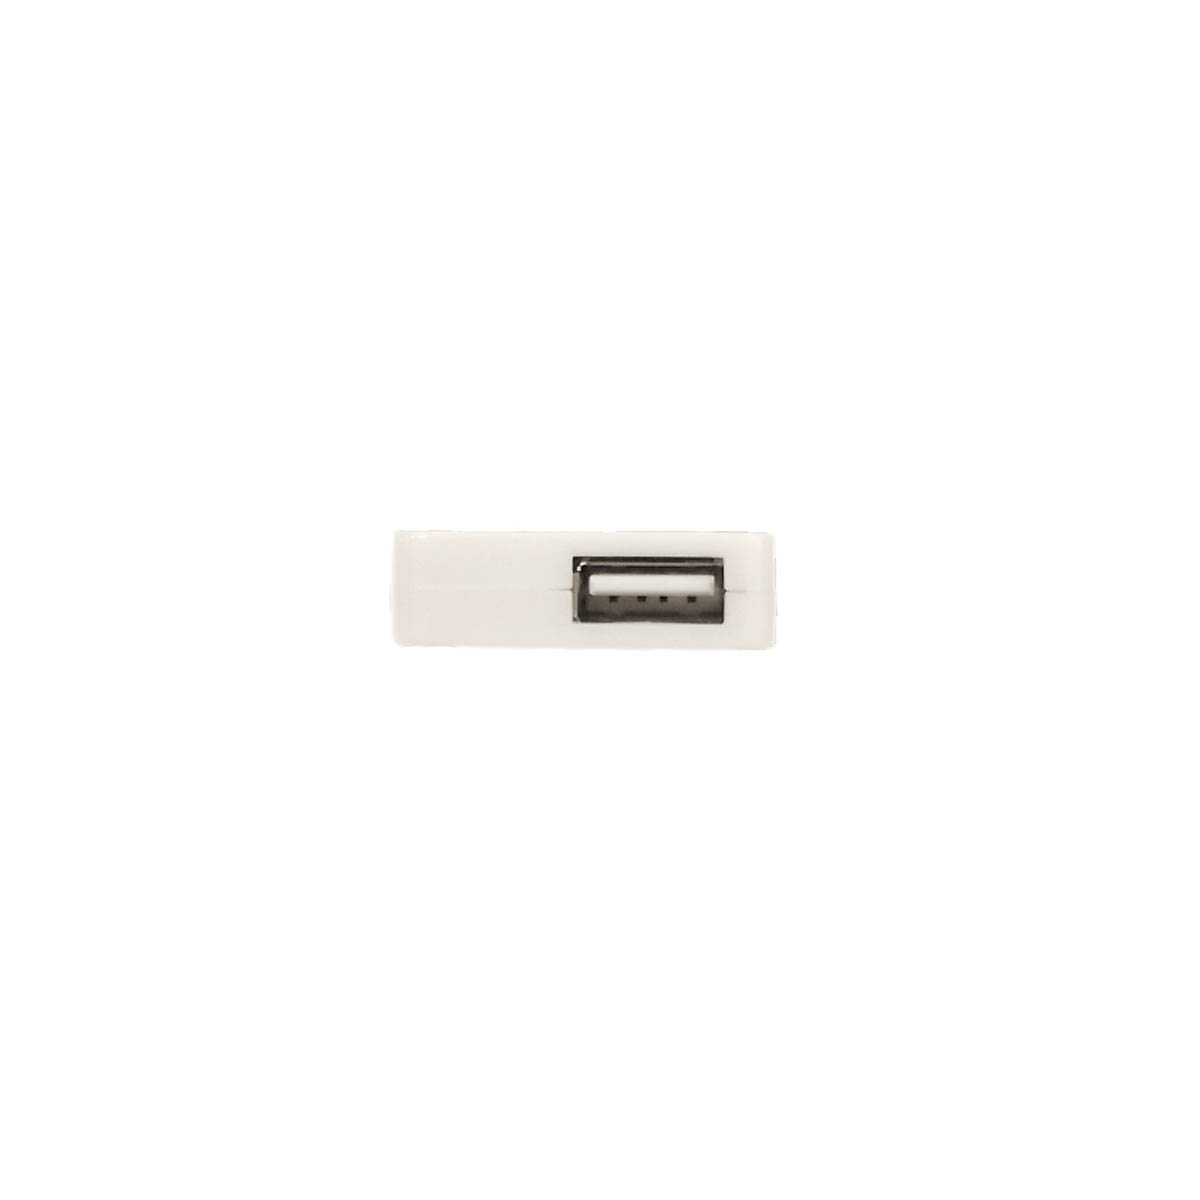 Переходник, хаб концентратор H407 USB на 4 USB 2.0, цвет белый